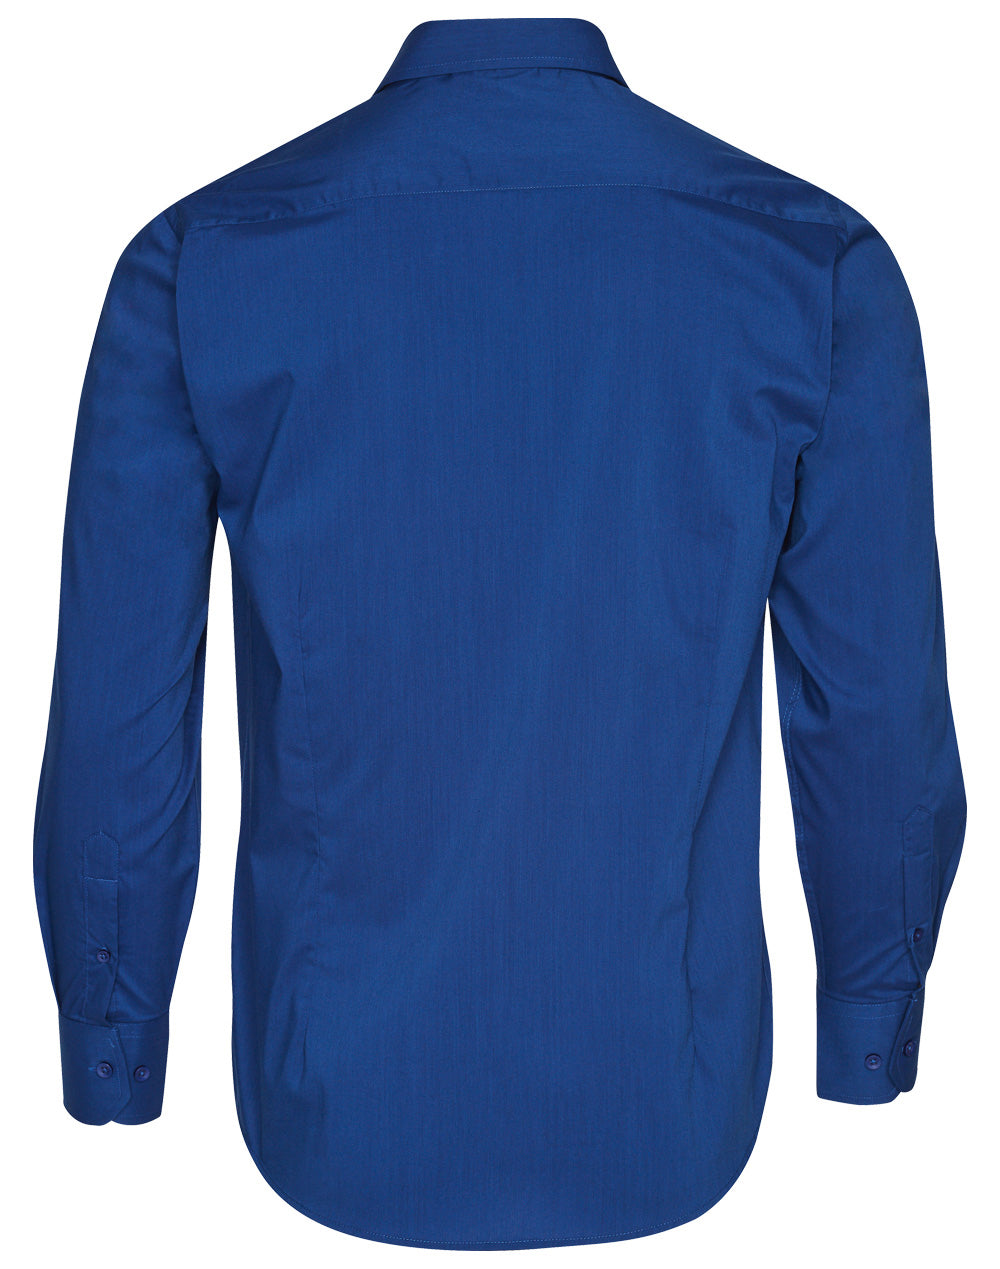 Winning Spirit-Men's Teflon Executive Long Sleeve Shirt-BS08L